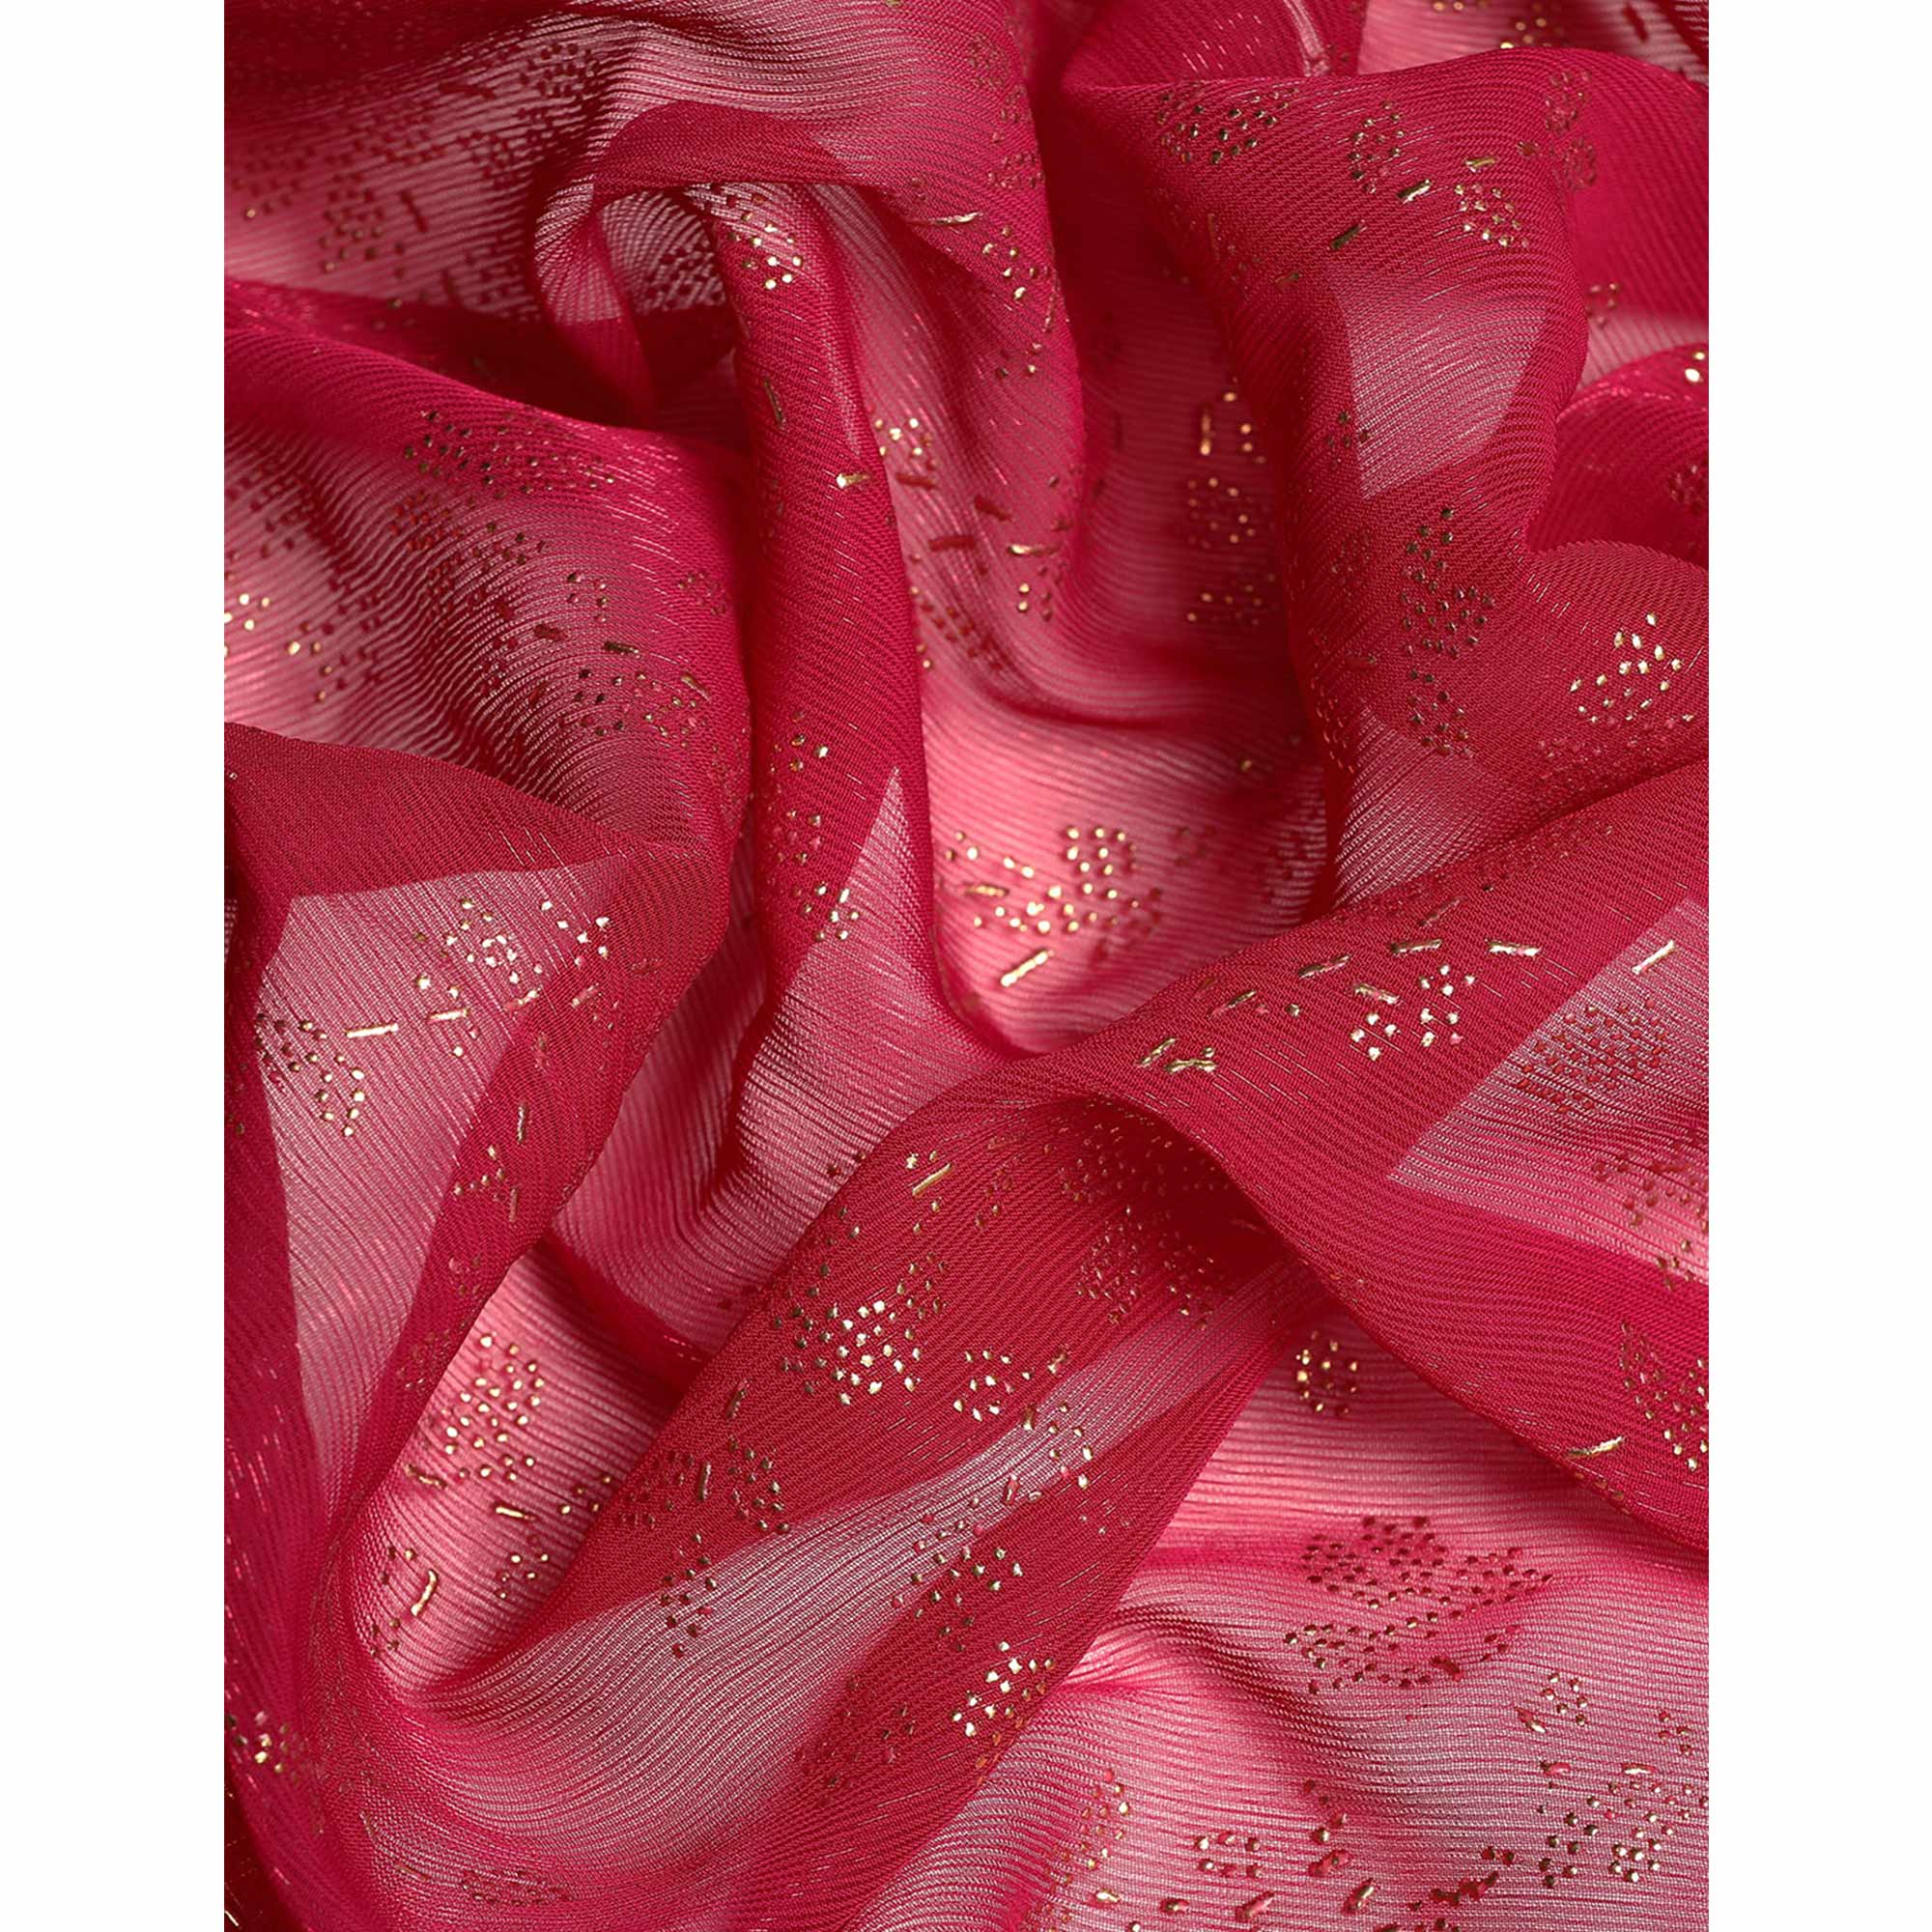 Maroon Floral Foil Printed Shimmer Saree